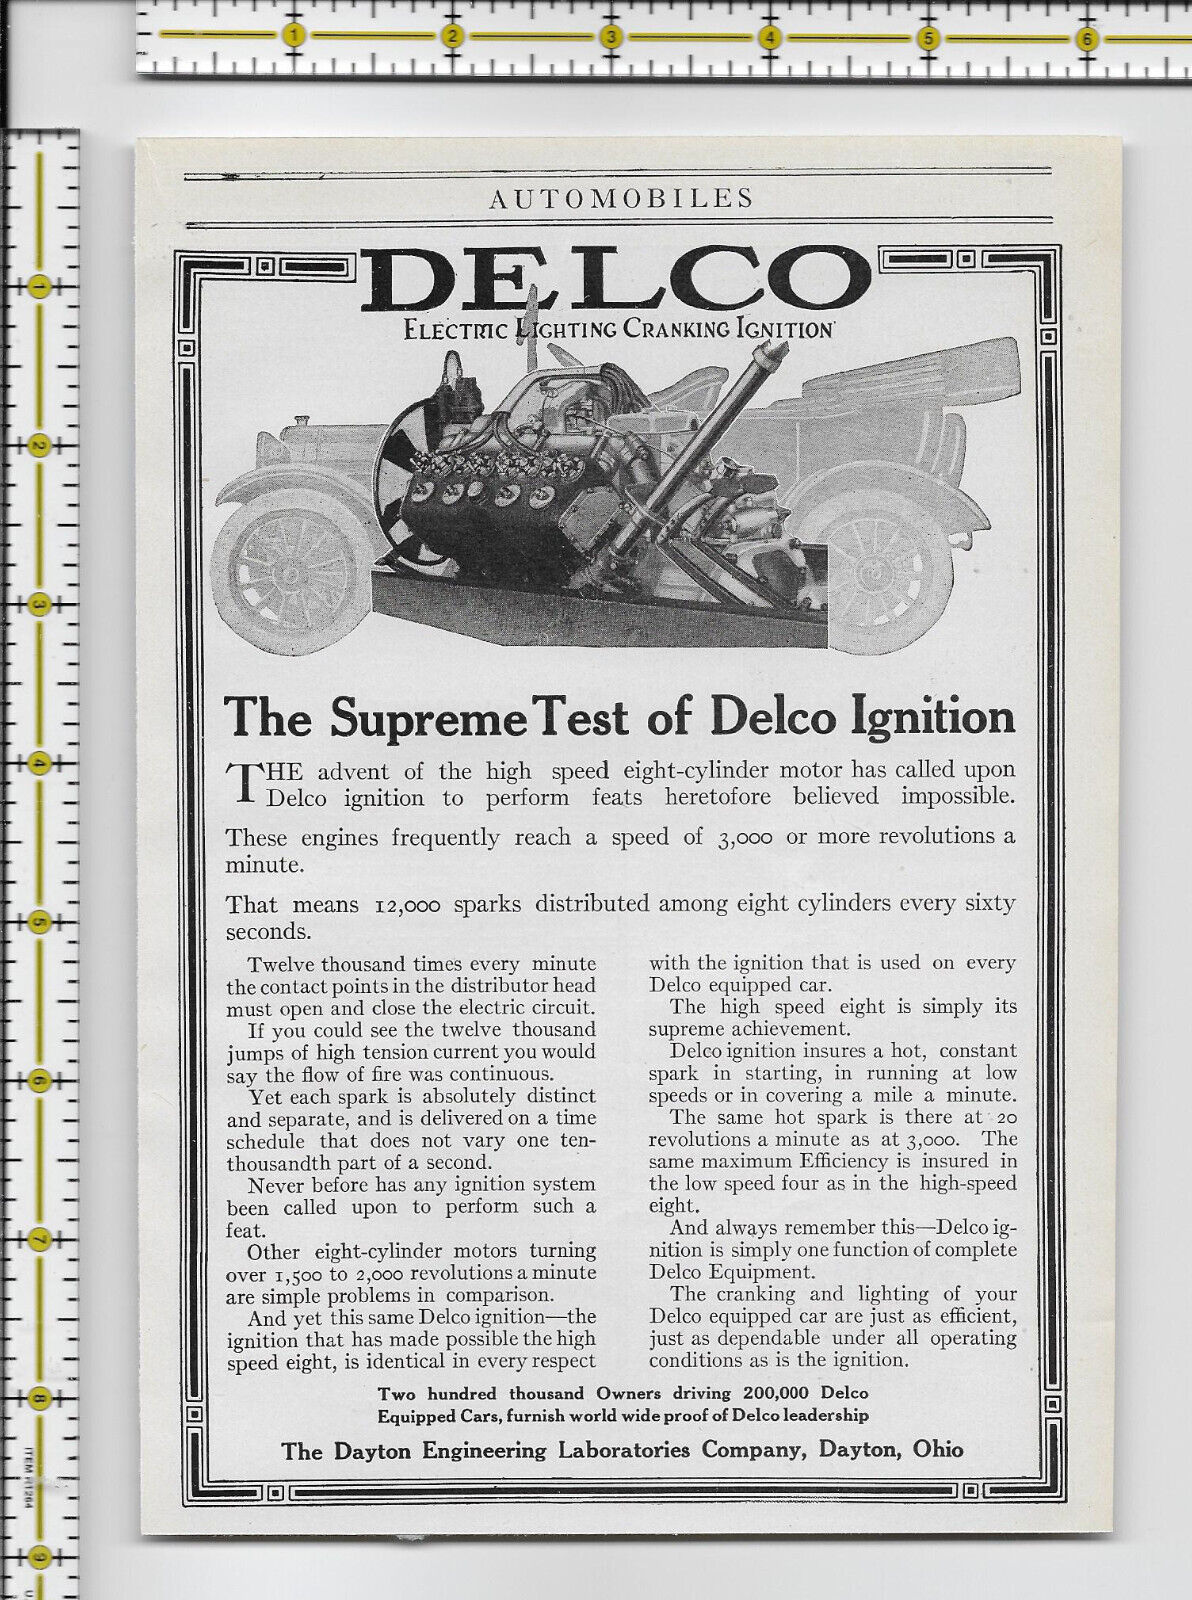 Delco Electric Lighting Cranking Ignition Dayton Ohio 1915 magazine print ad